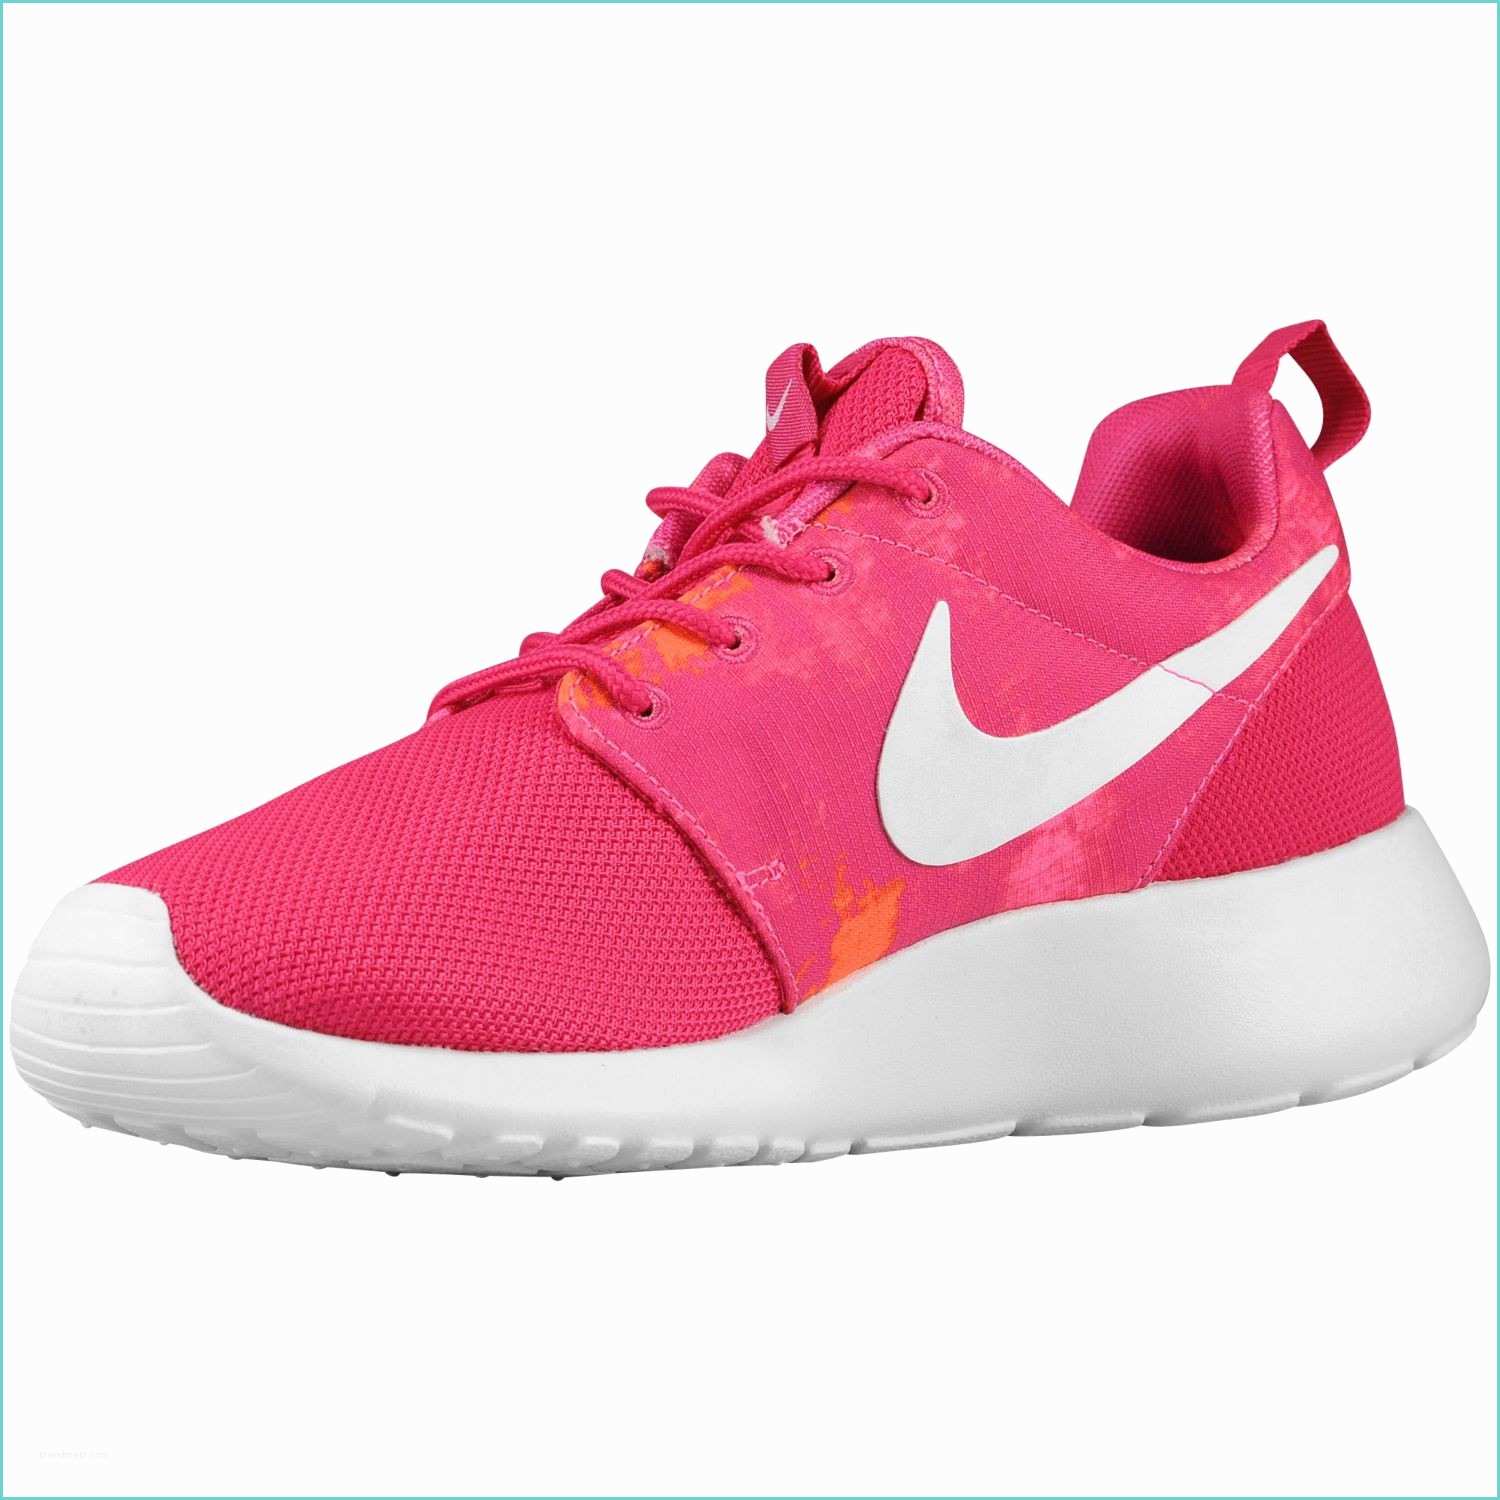 Total Sports Shoes Nike Roshe E Print Womens Sports Shoes Fireberry Pink